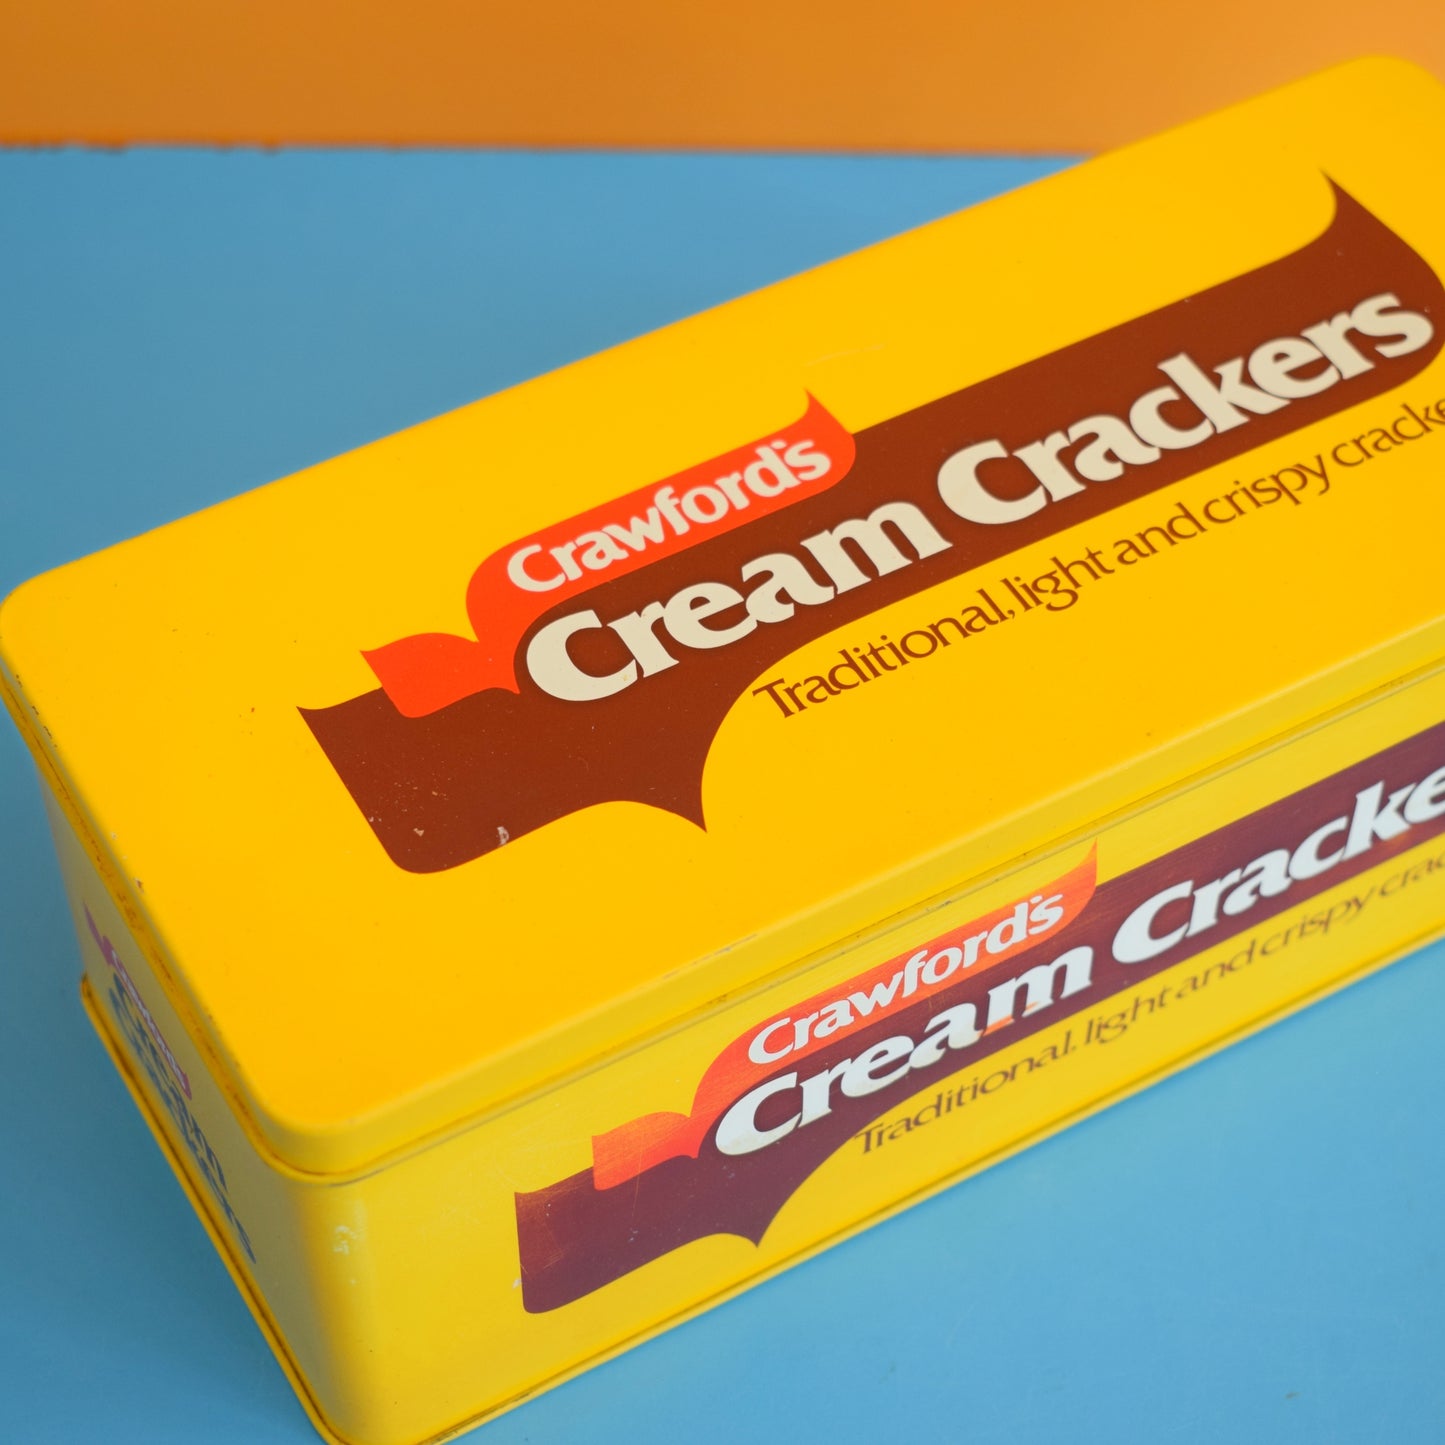 Vintage 1970s Crawfords Cream Cracker Tin